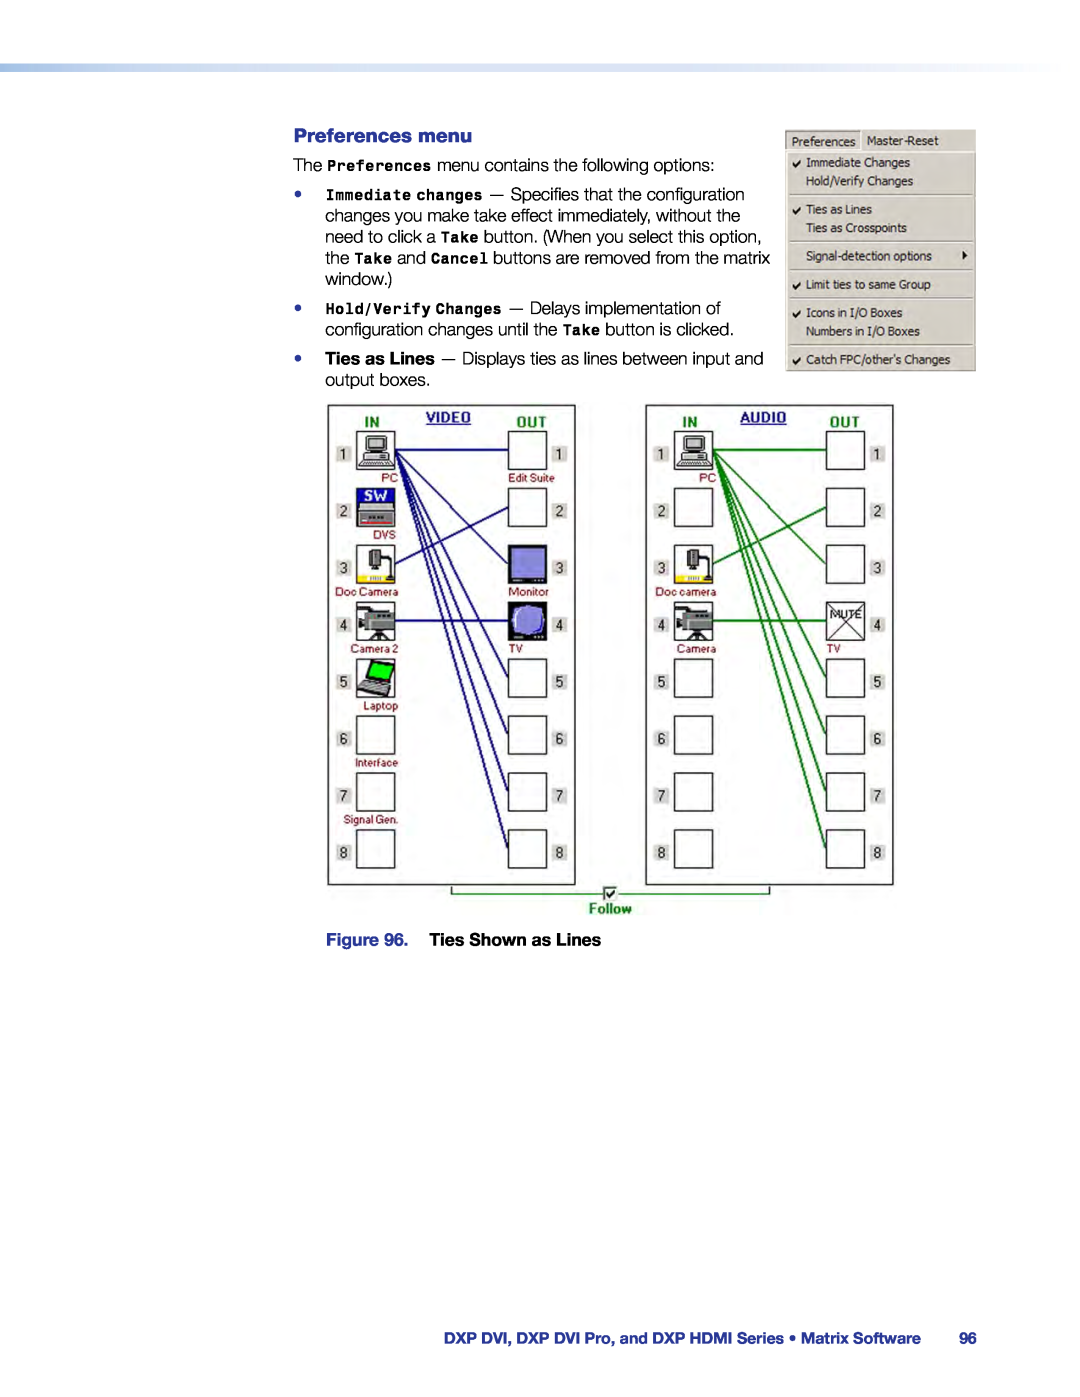 Extron electronic DXP DVI PRO manual Preferences menu, Ties Shown as Lines 